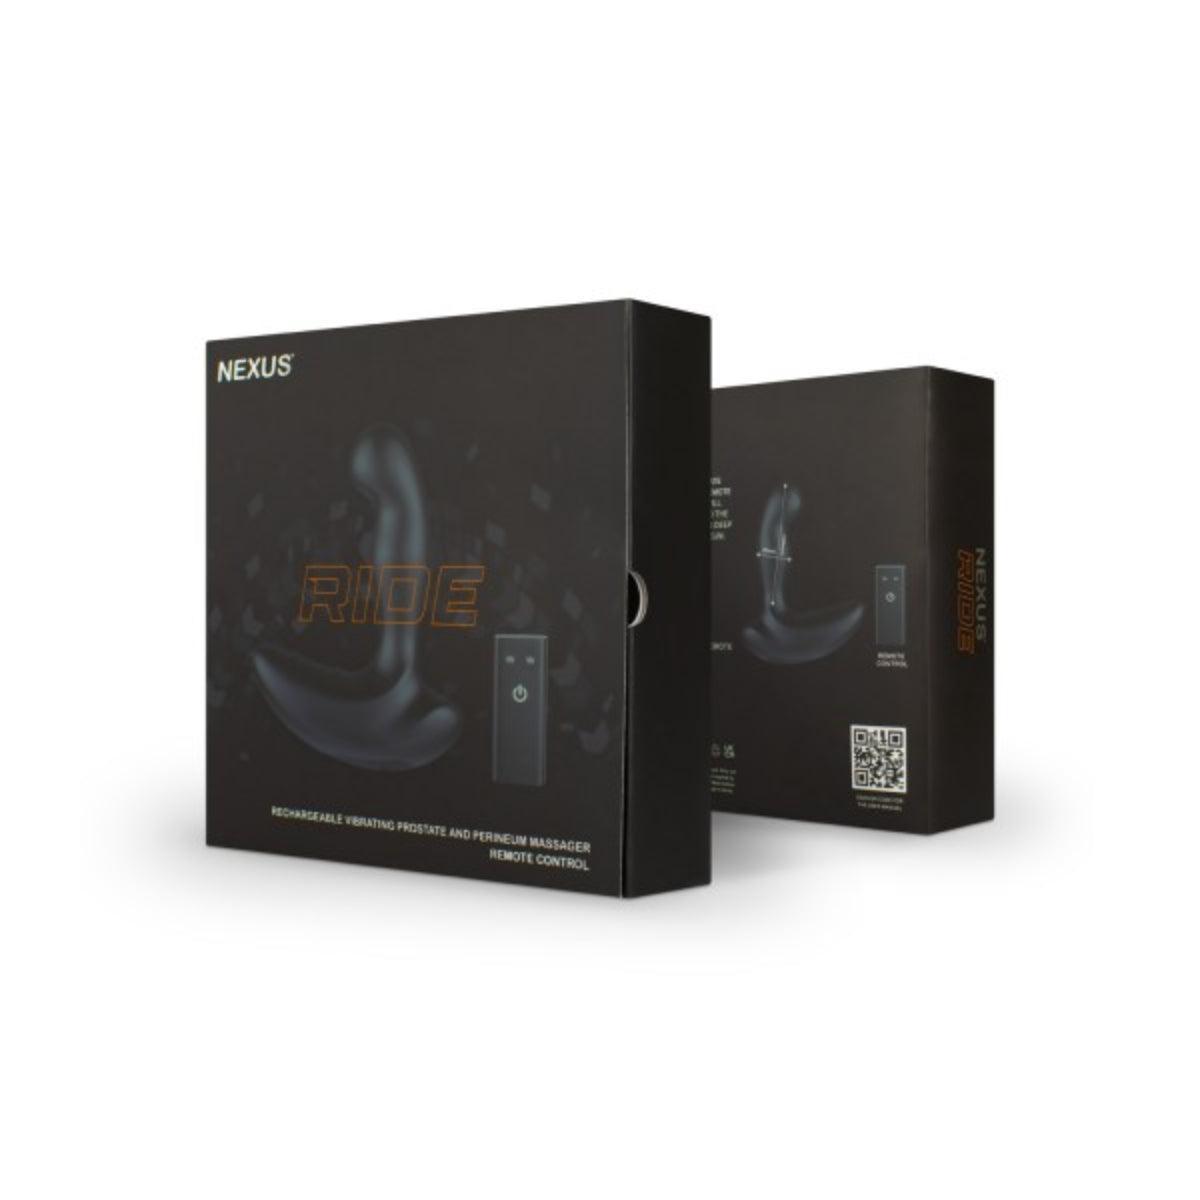 Nexus RIDE Remote Control Prostate Dual Motor Vibrator Black